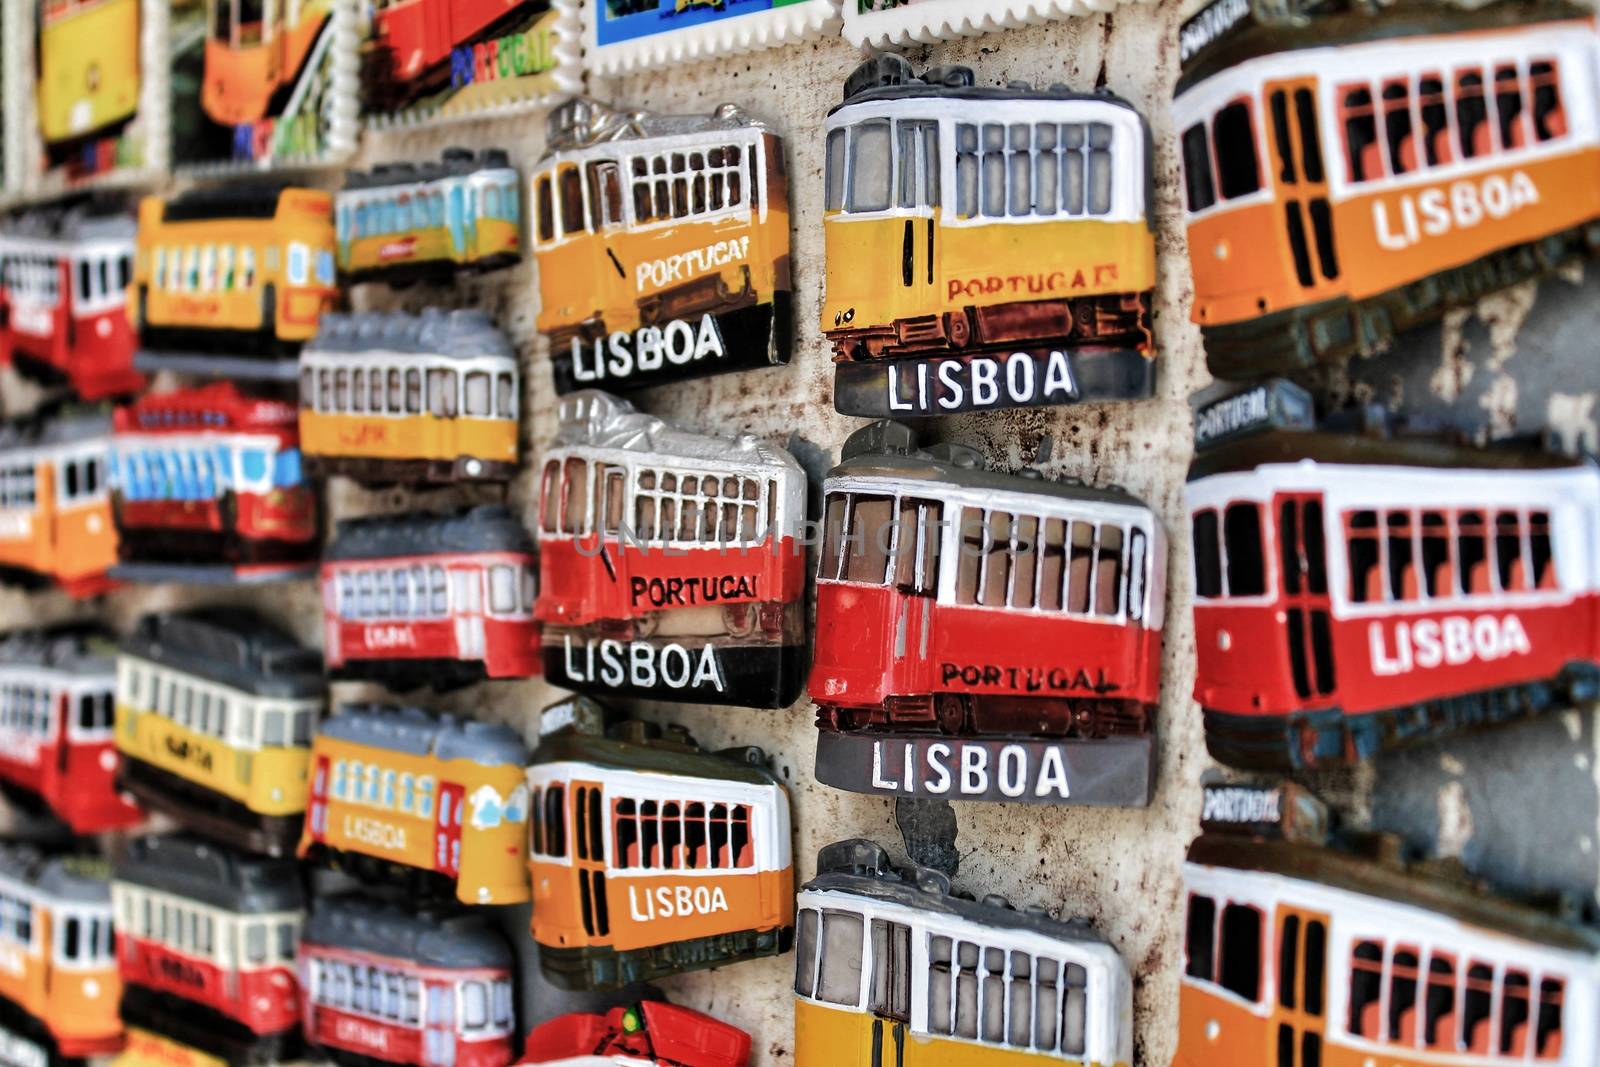 Colorful magnet tram and tiles souvenirs of Lisbon city. Word Lisbon written.